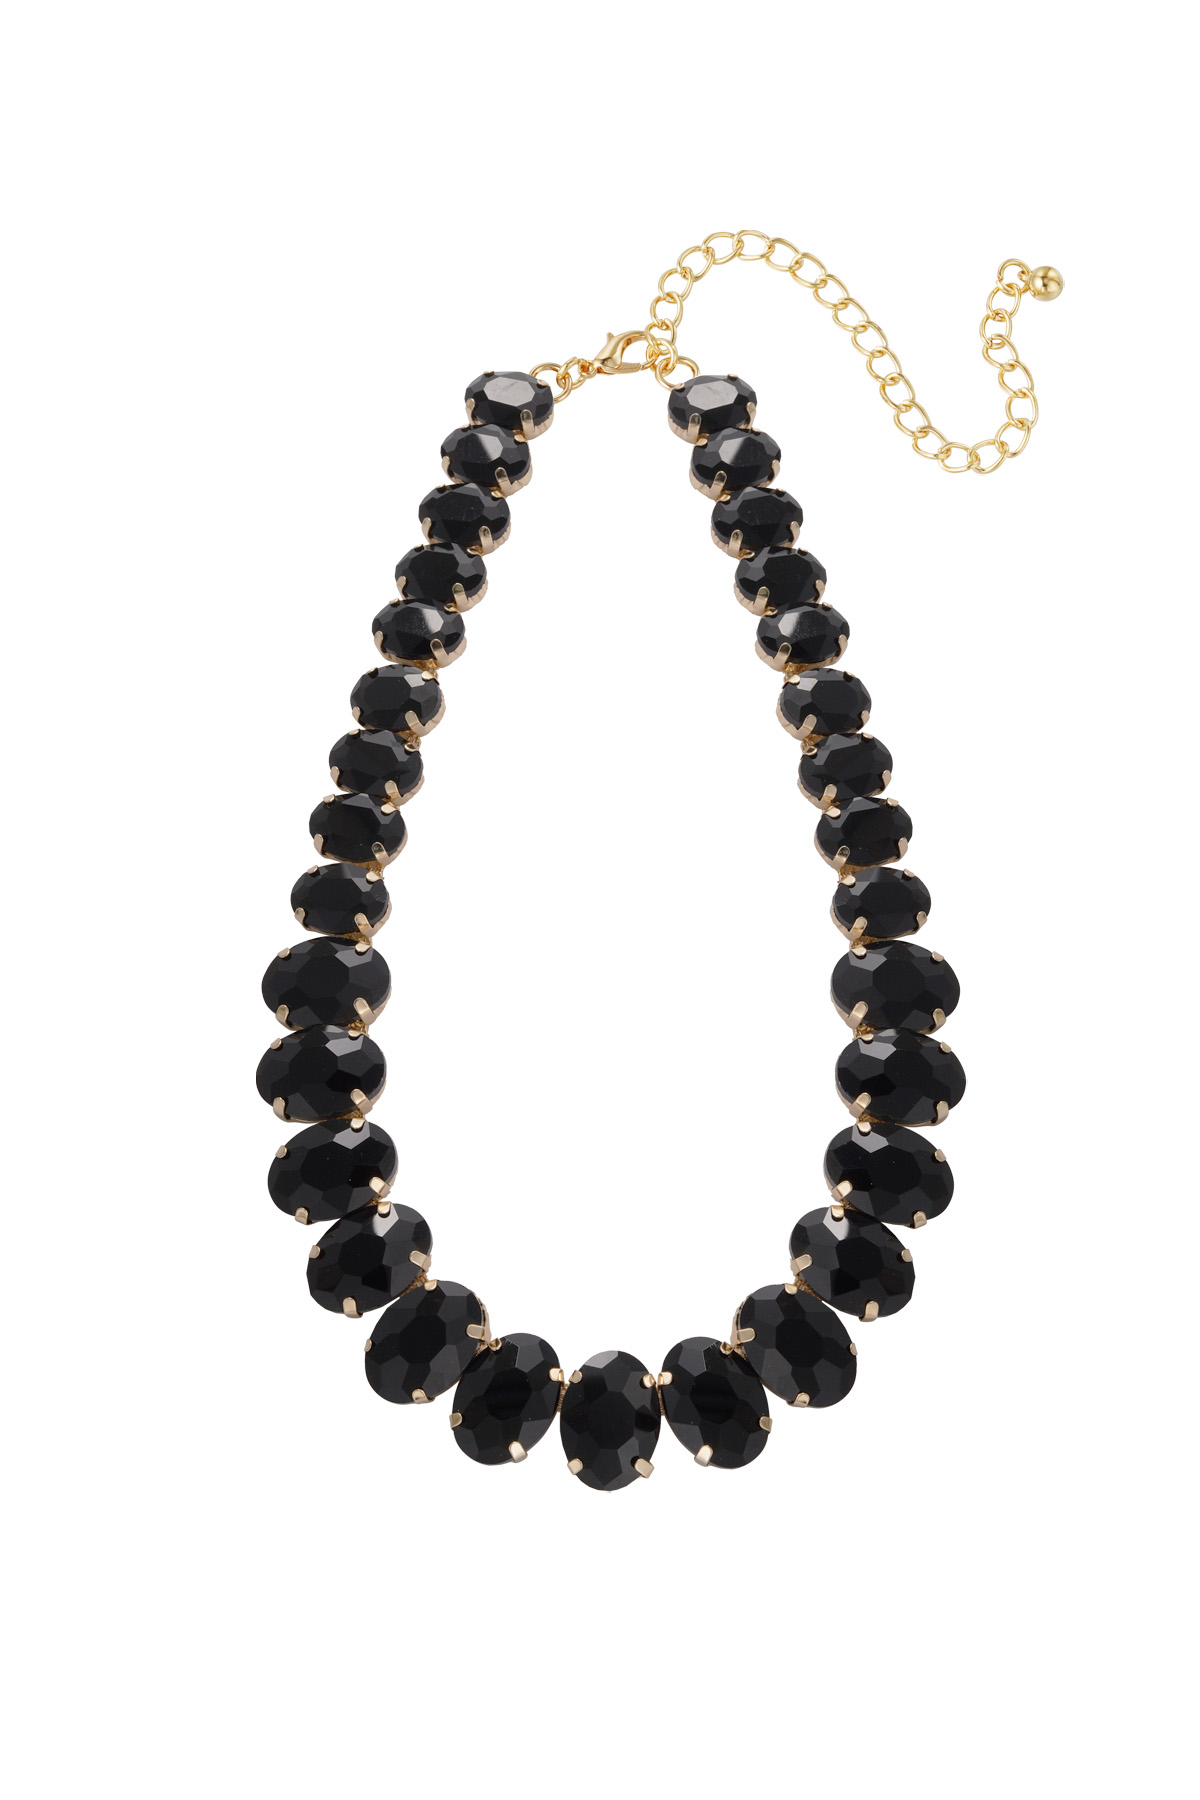 Halskette große ovale Perlen - schwarz